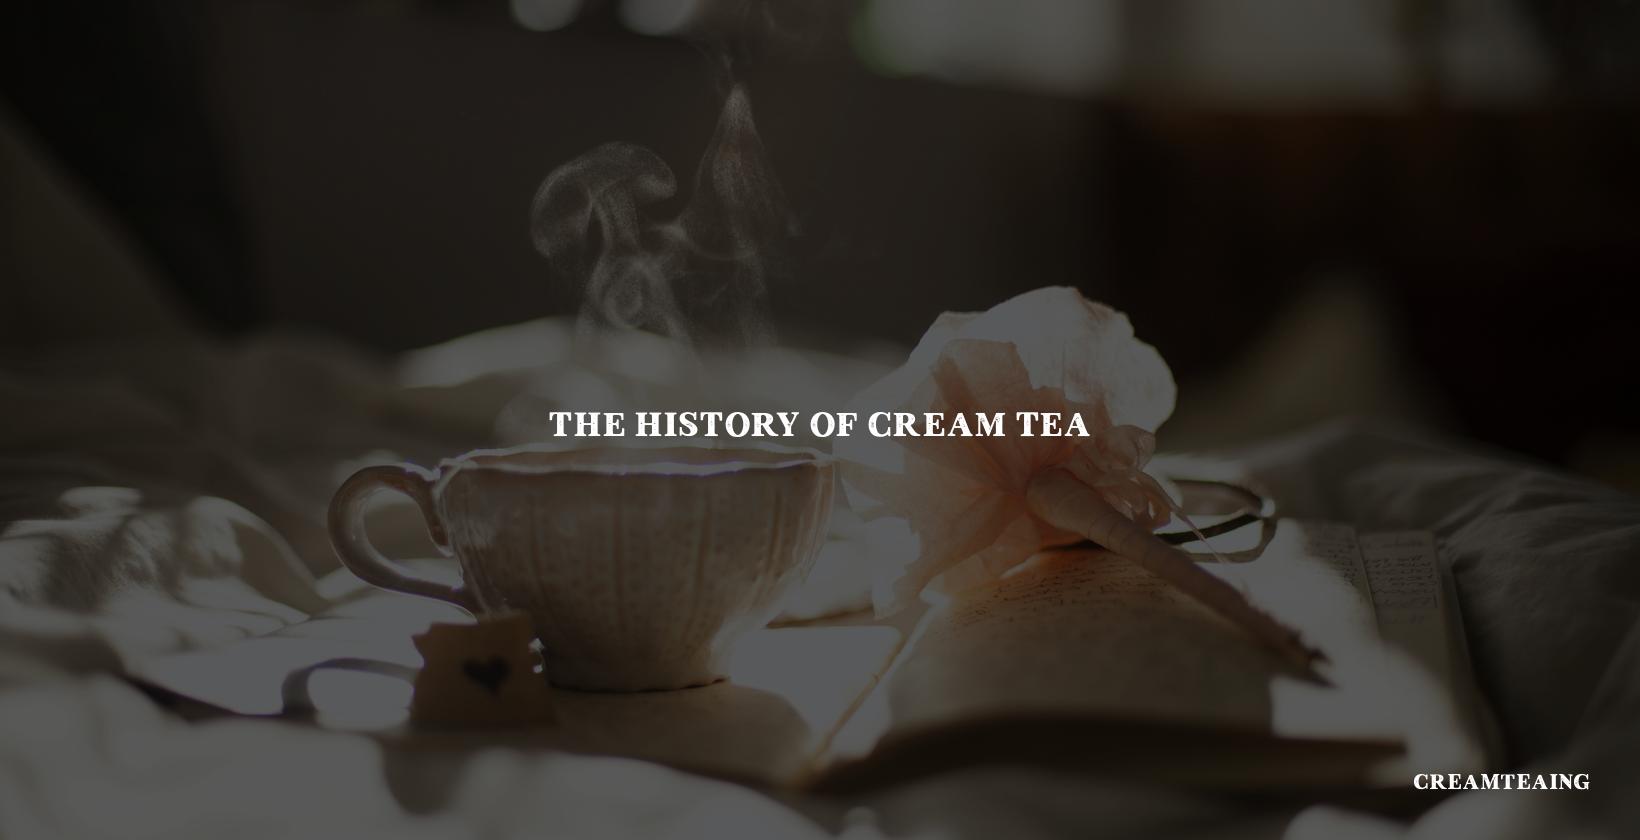 The History of Cream Tea